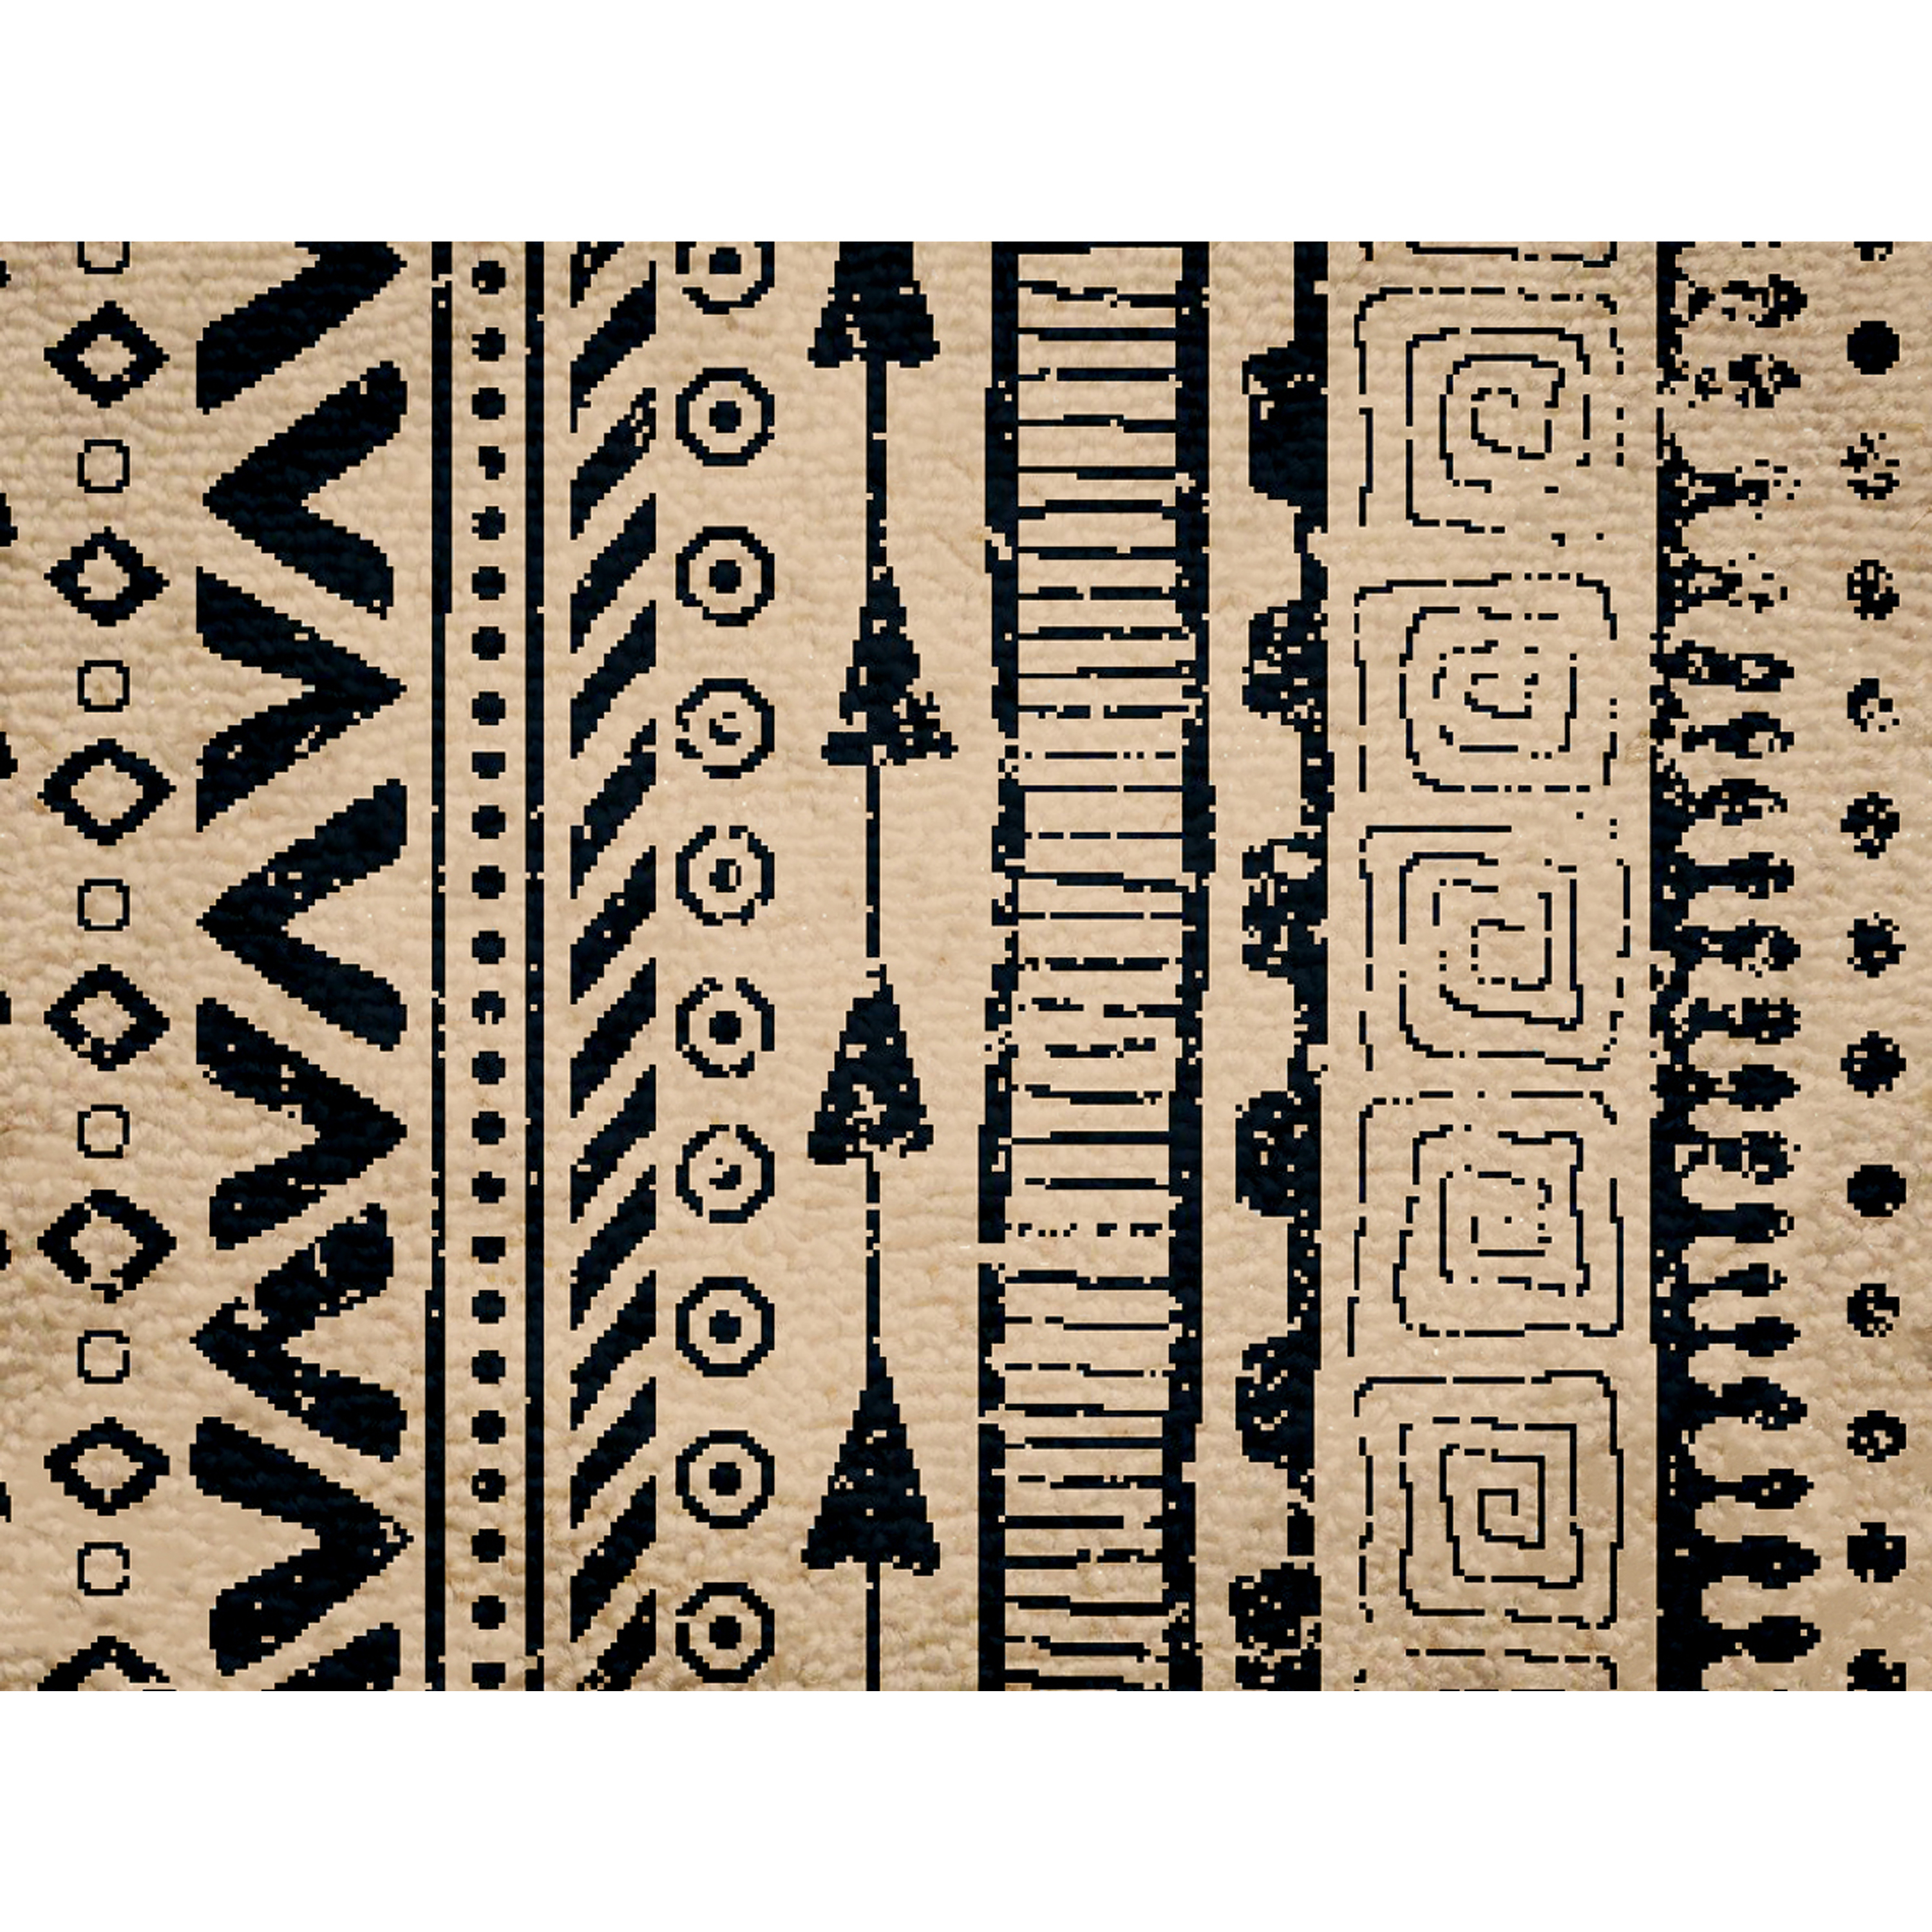 Deerlux Boho Living Room Area Rug With Nonslip Backing, Bohemian Tribal Print Pattern - 2.5 X 6.5